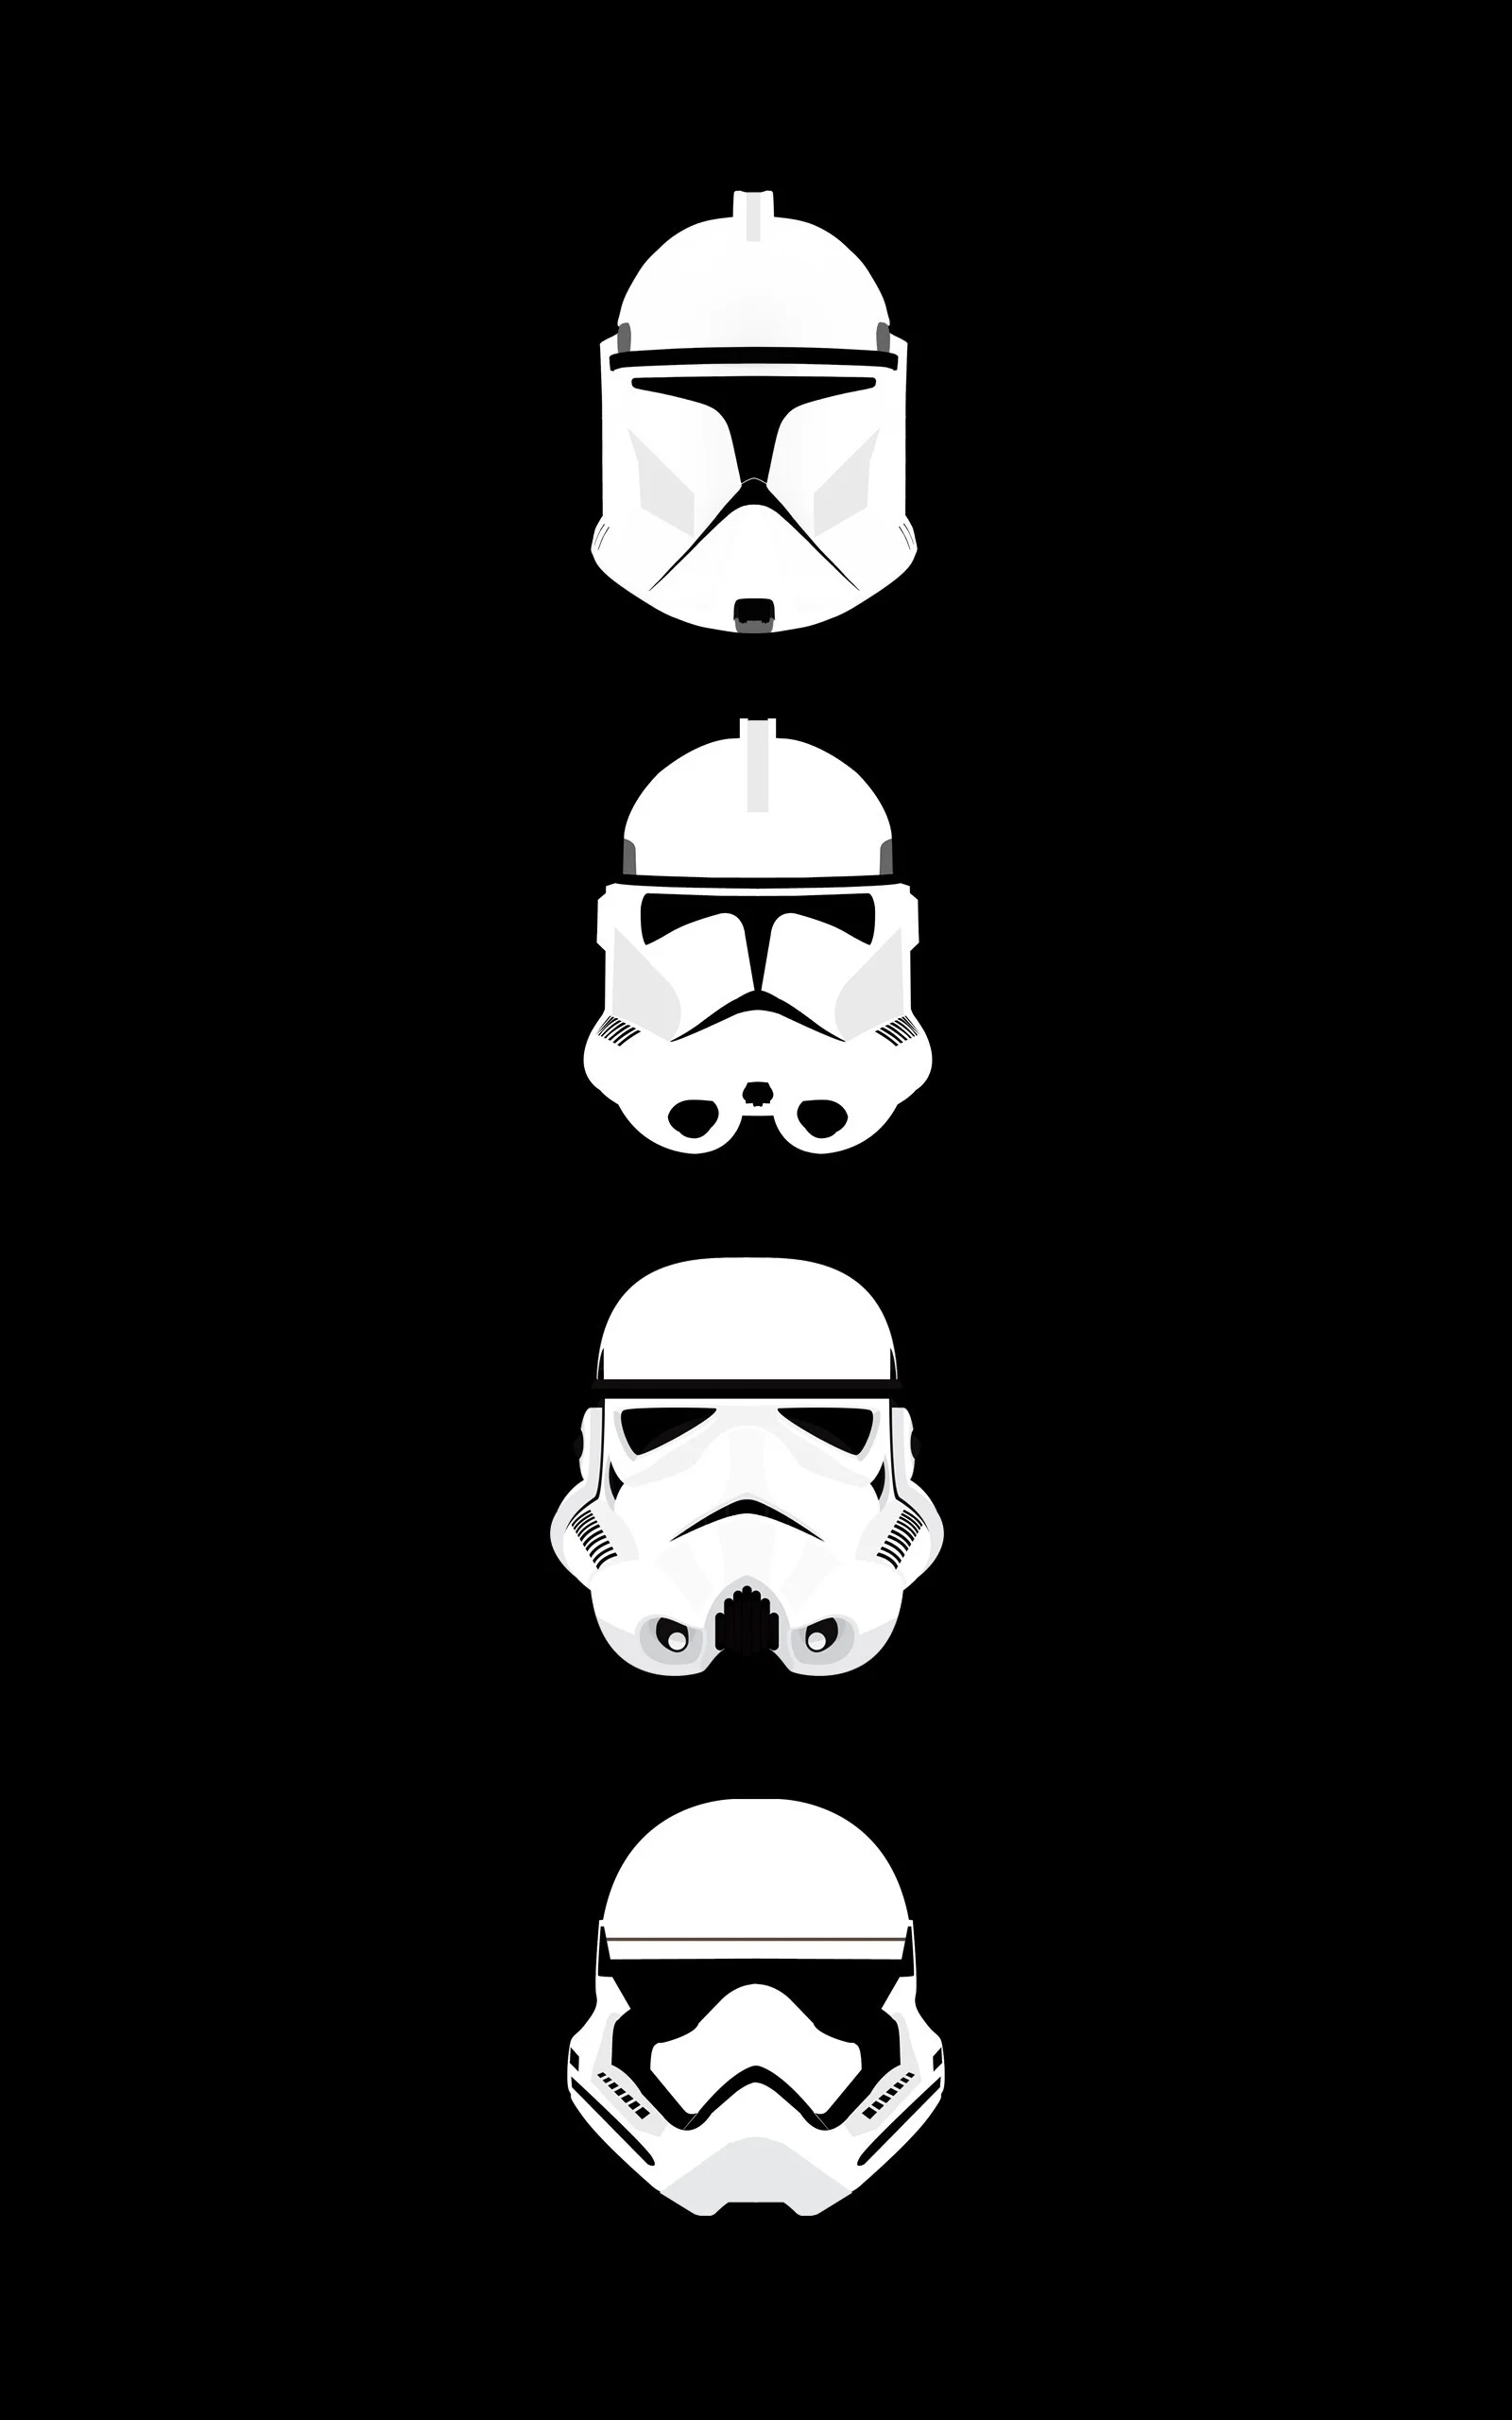 General Star Wars clone trooper stormtrooper helmet minimalism portrait display